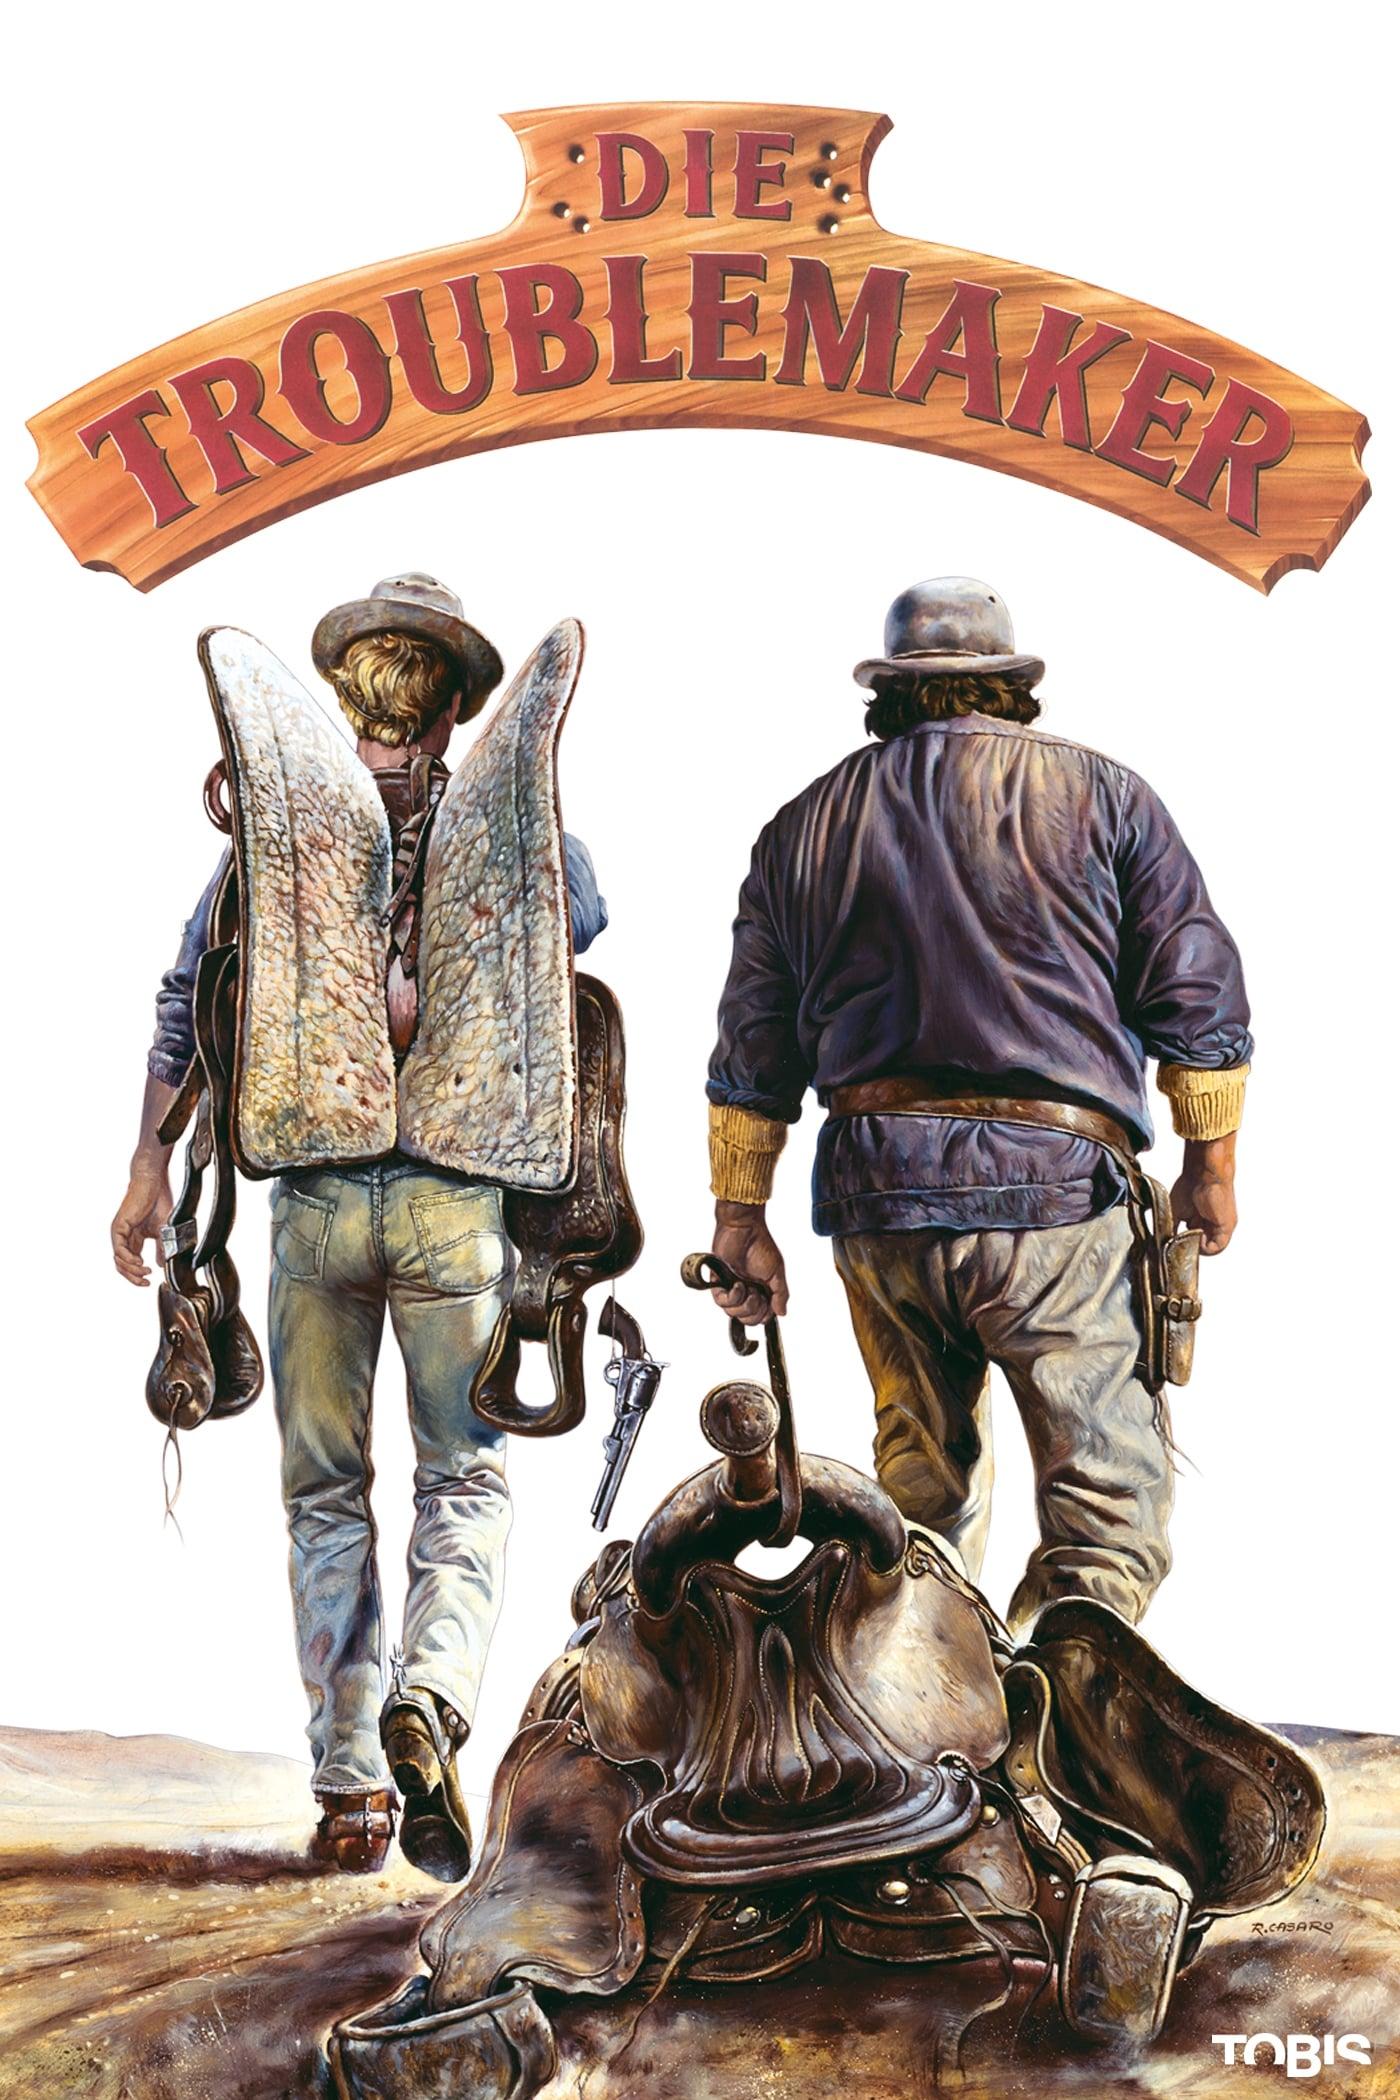 Die Troublemaker poster